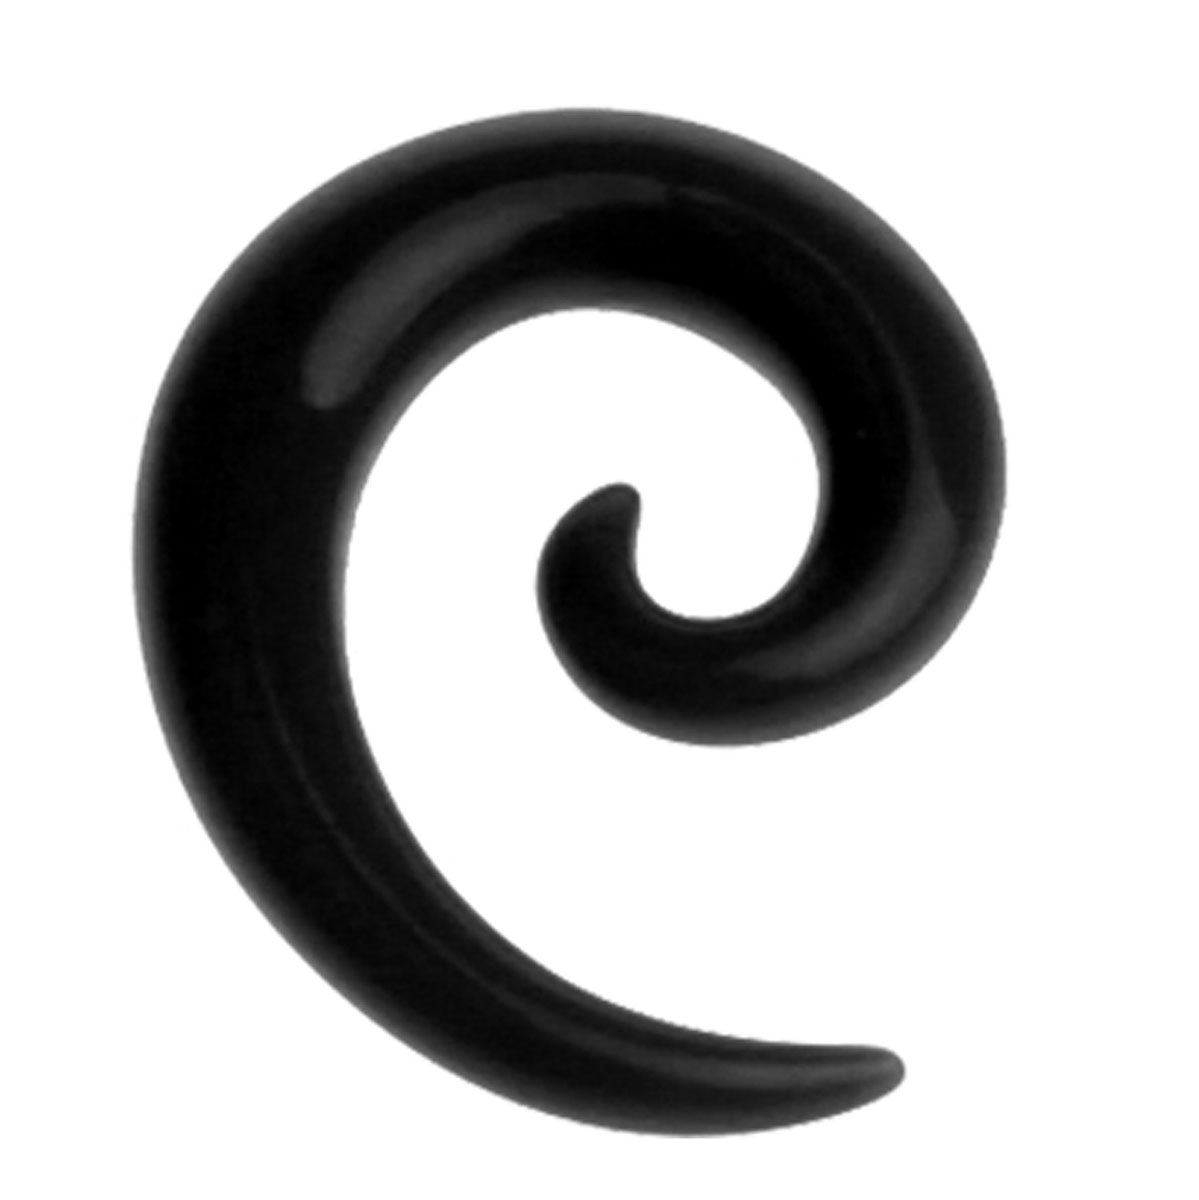 Spiral stretch smycken 10mm (akryl)